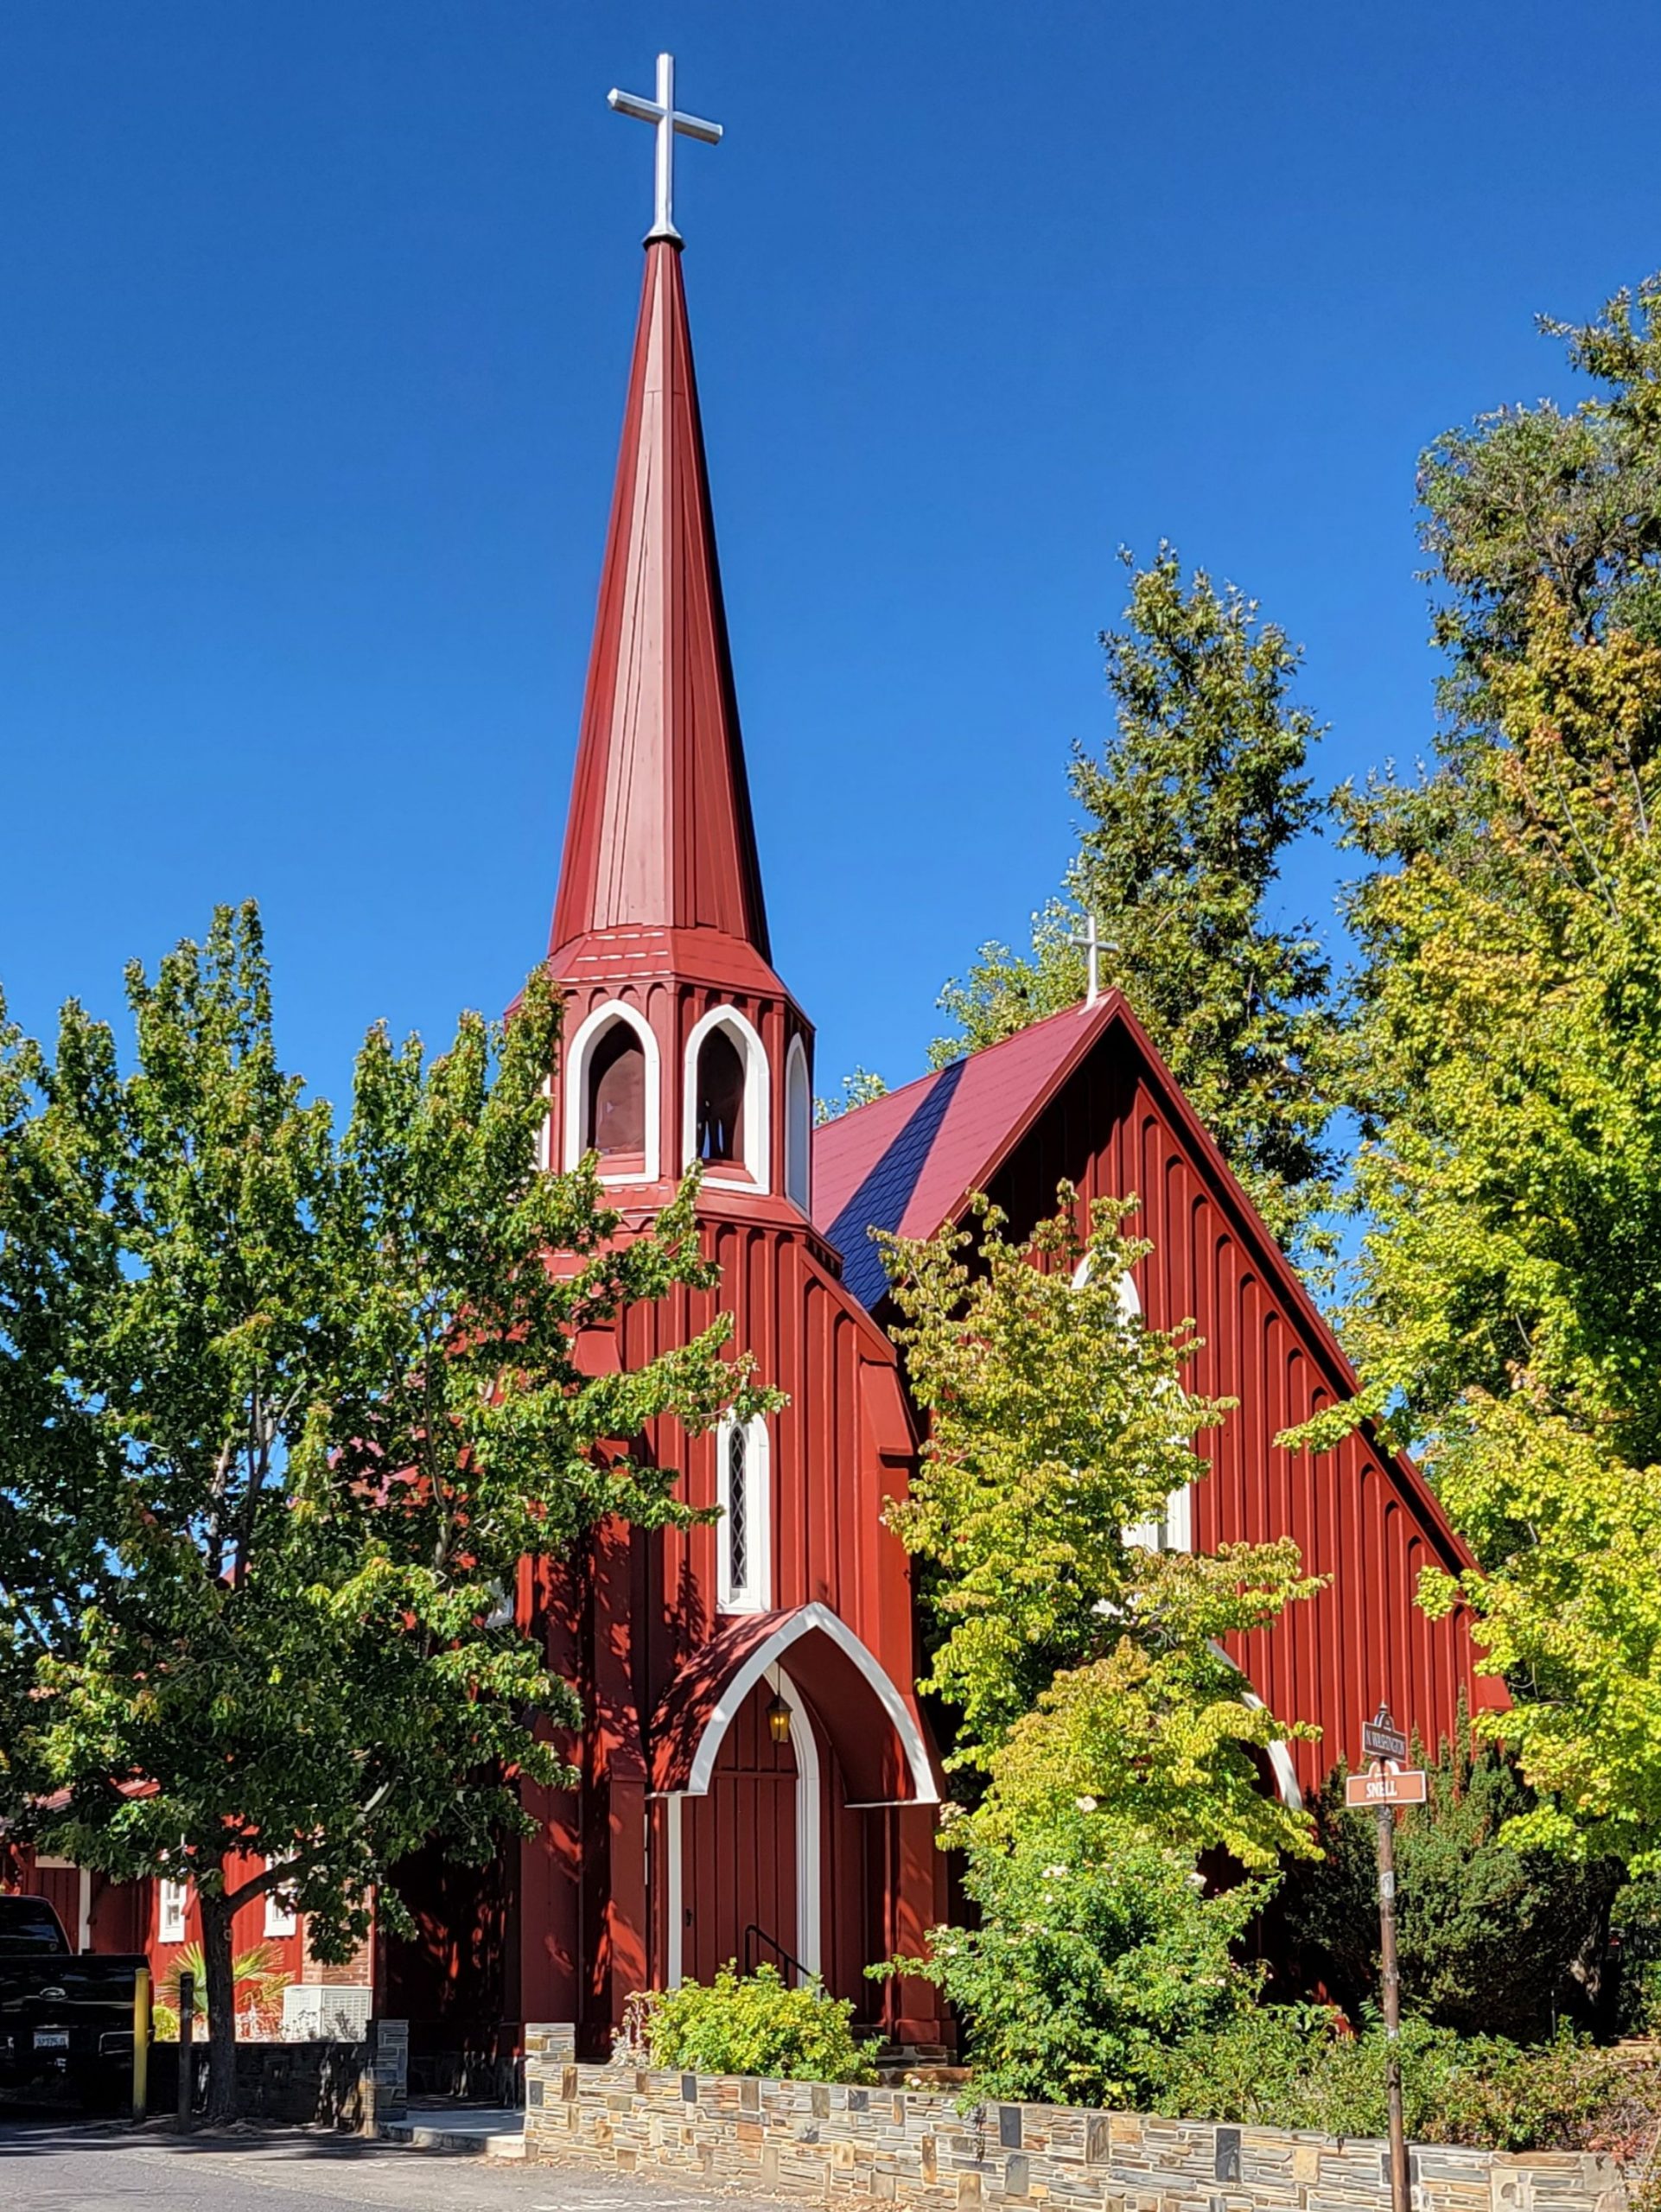 Red Church